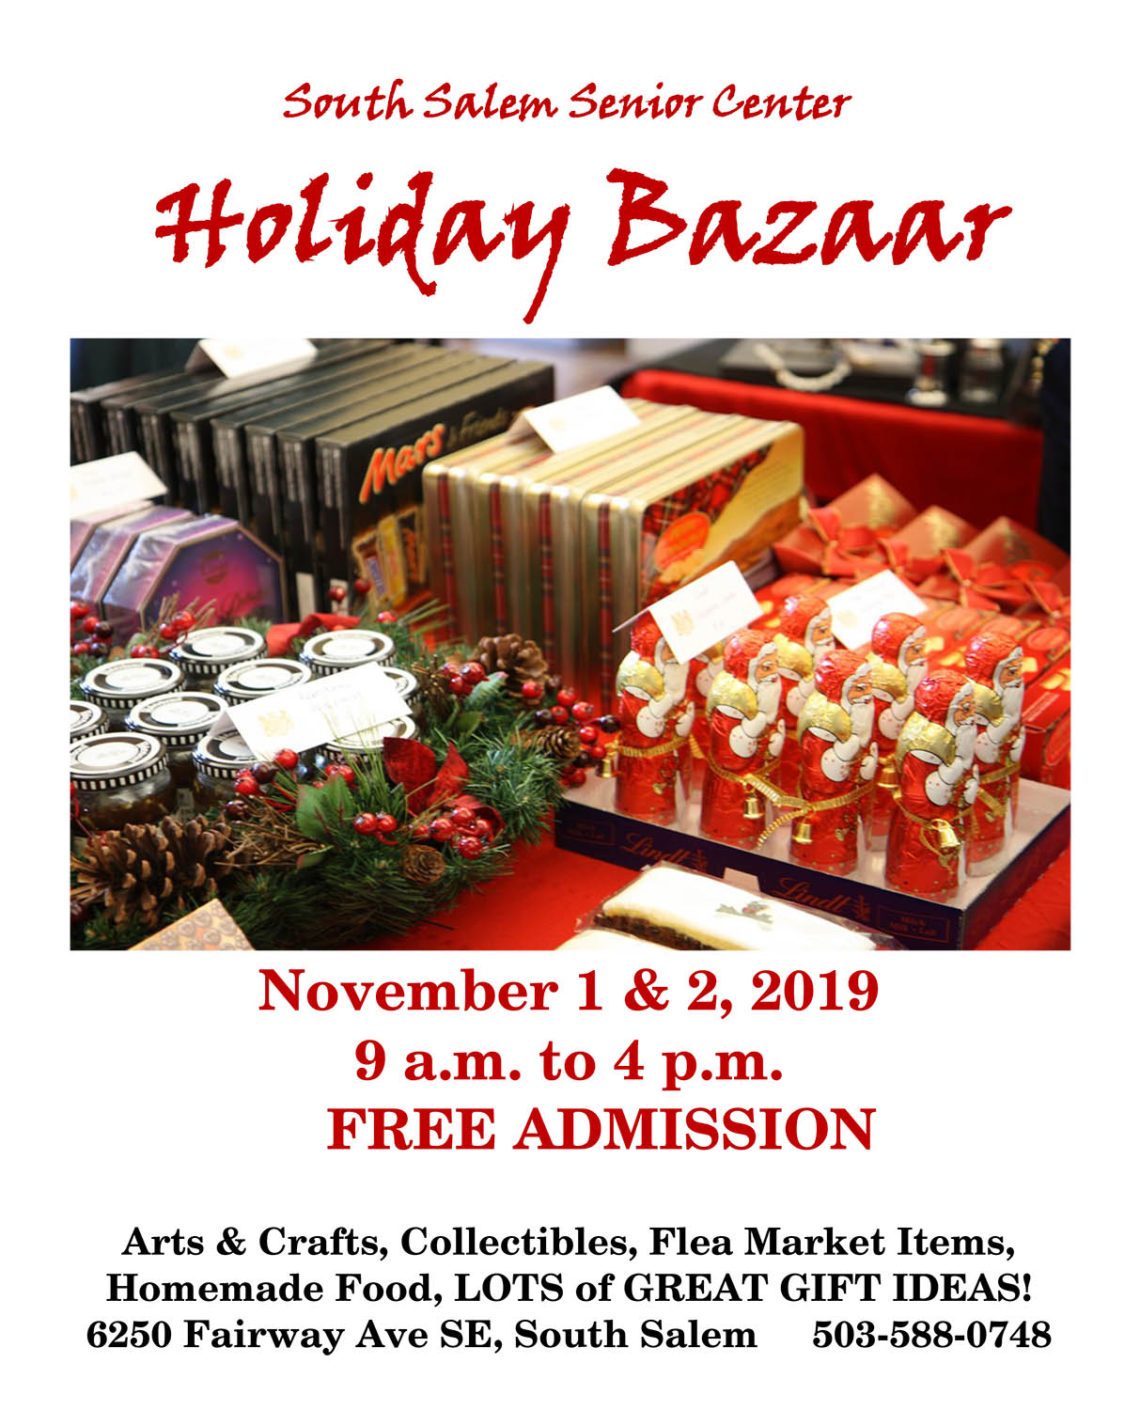 Holiday Bazaar November 1 & 2, 2019 South Salem Seniors